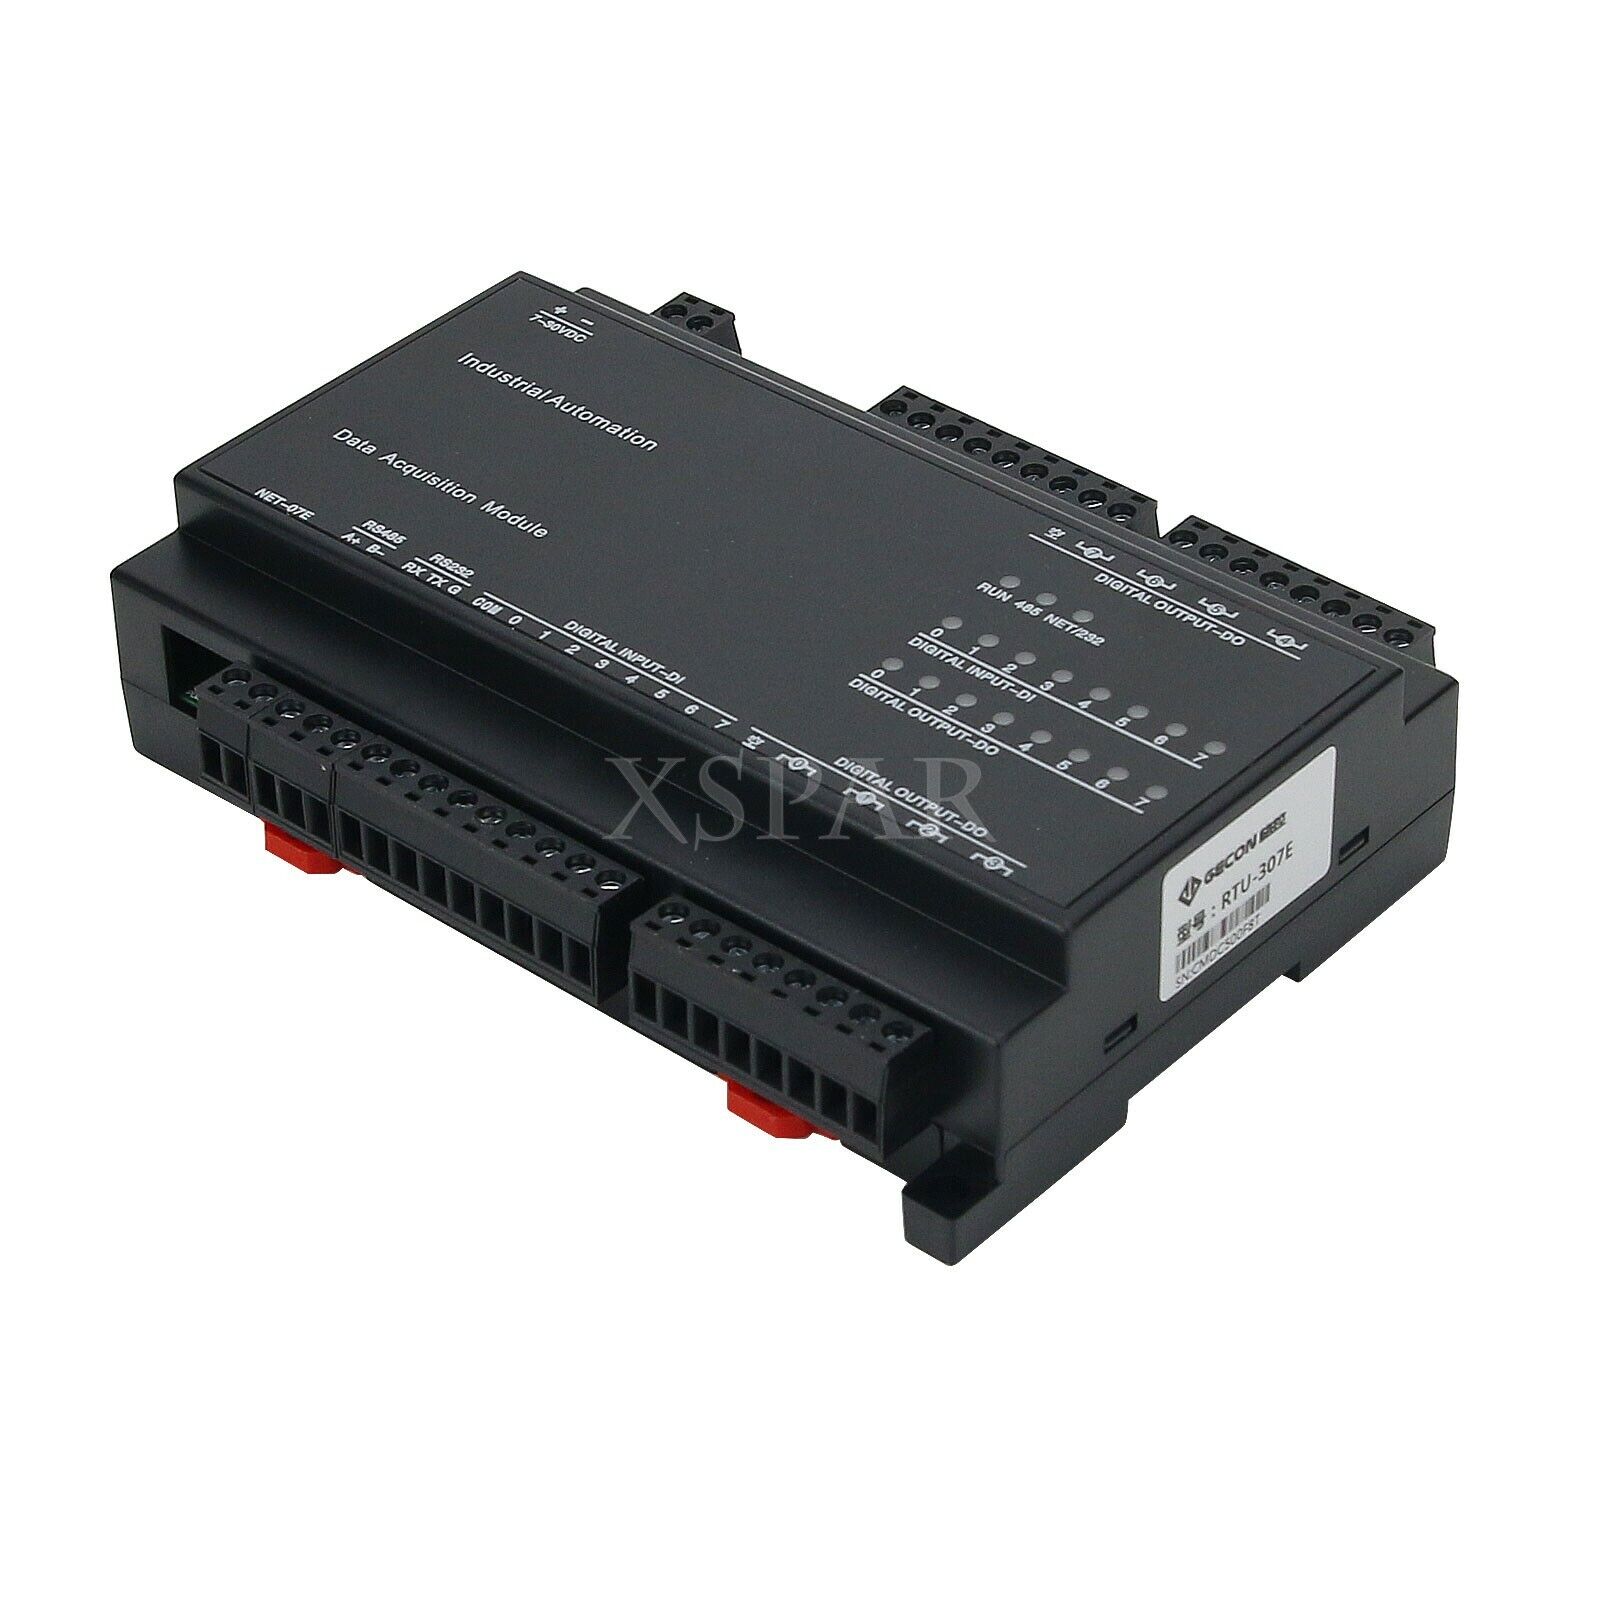 Controller For Modbus RTU Protocol Digital Input&Output RTU-307E 8DI+8DO x-top